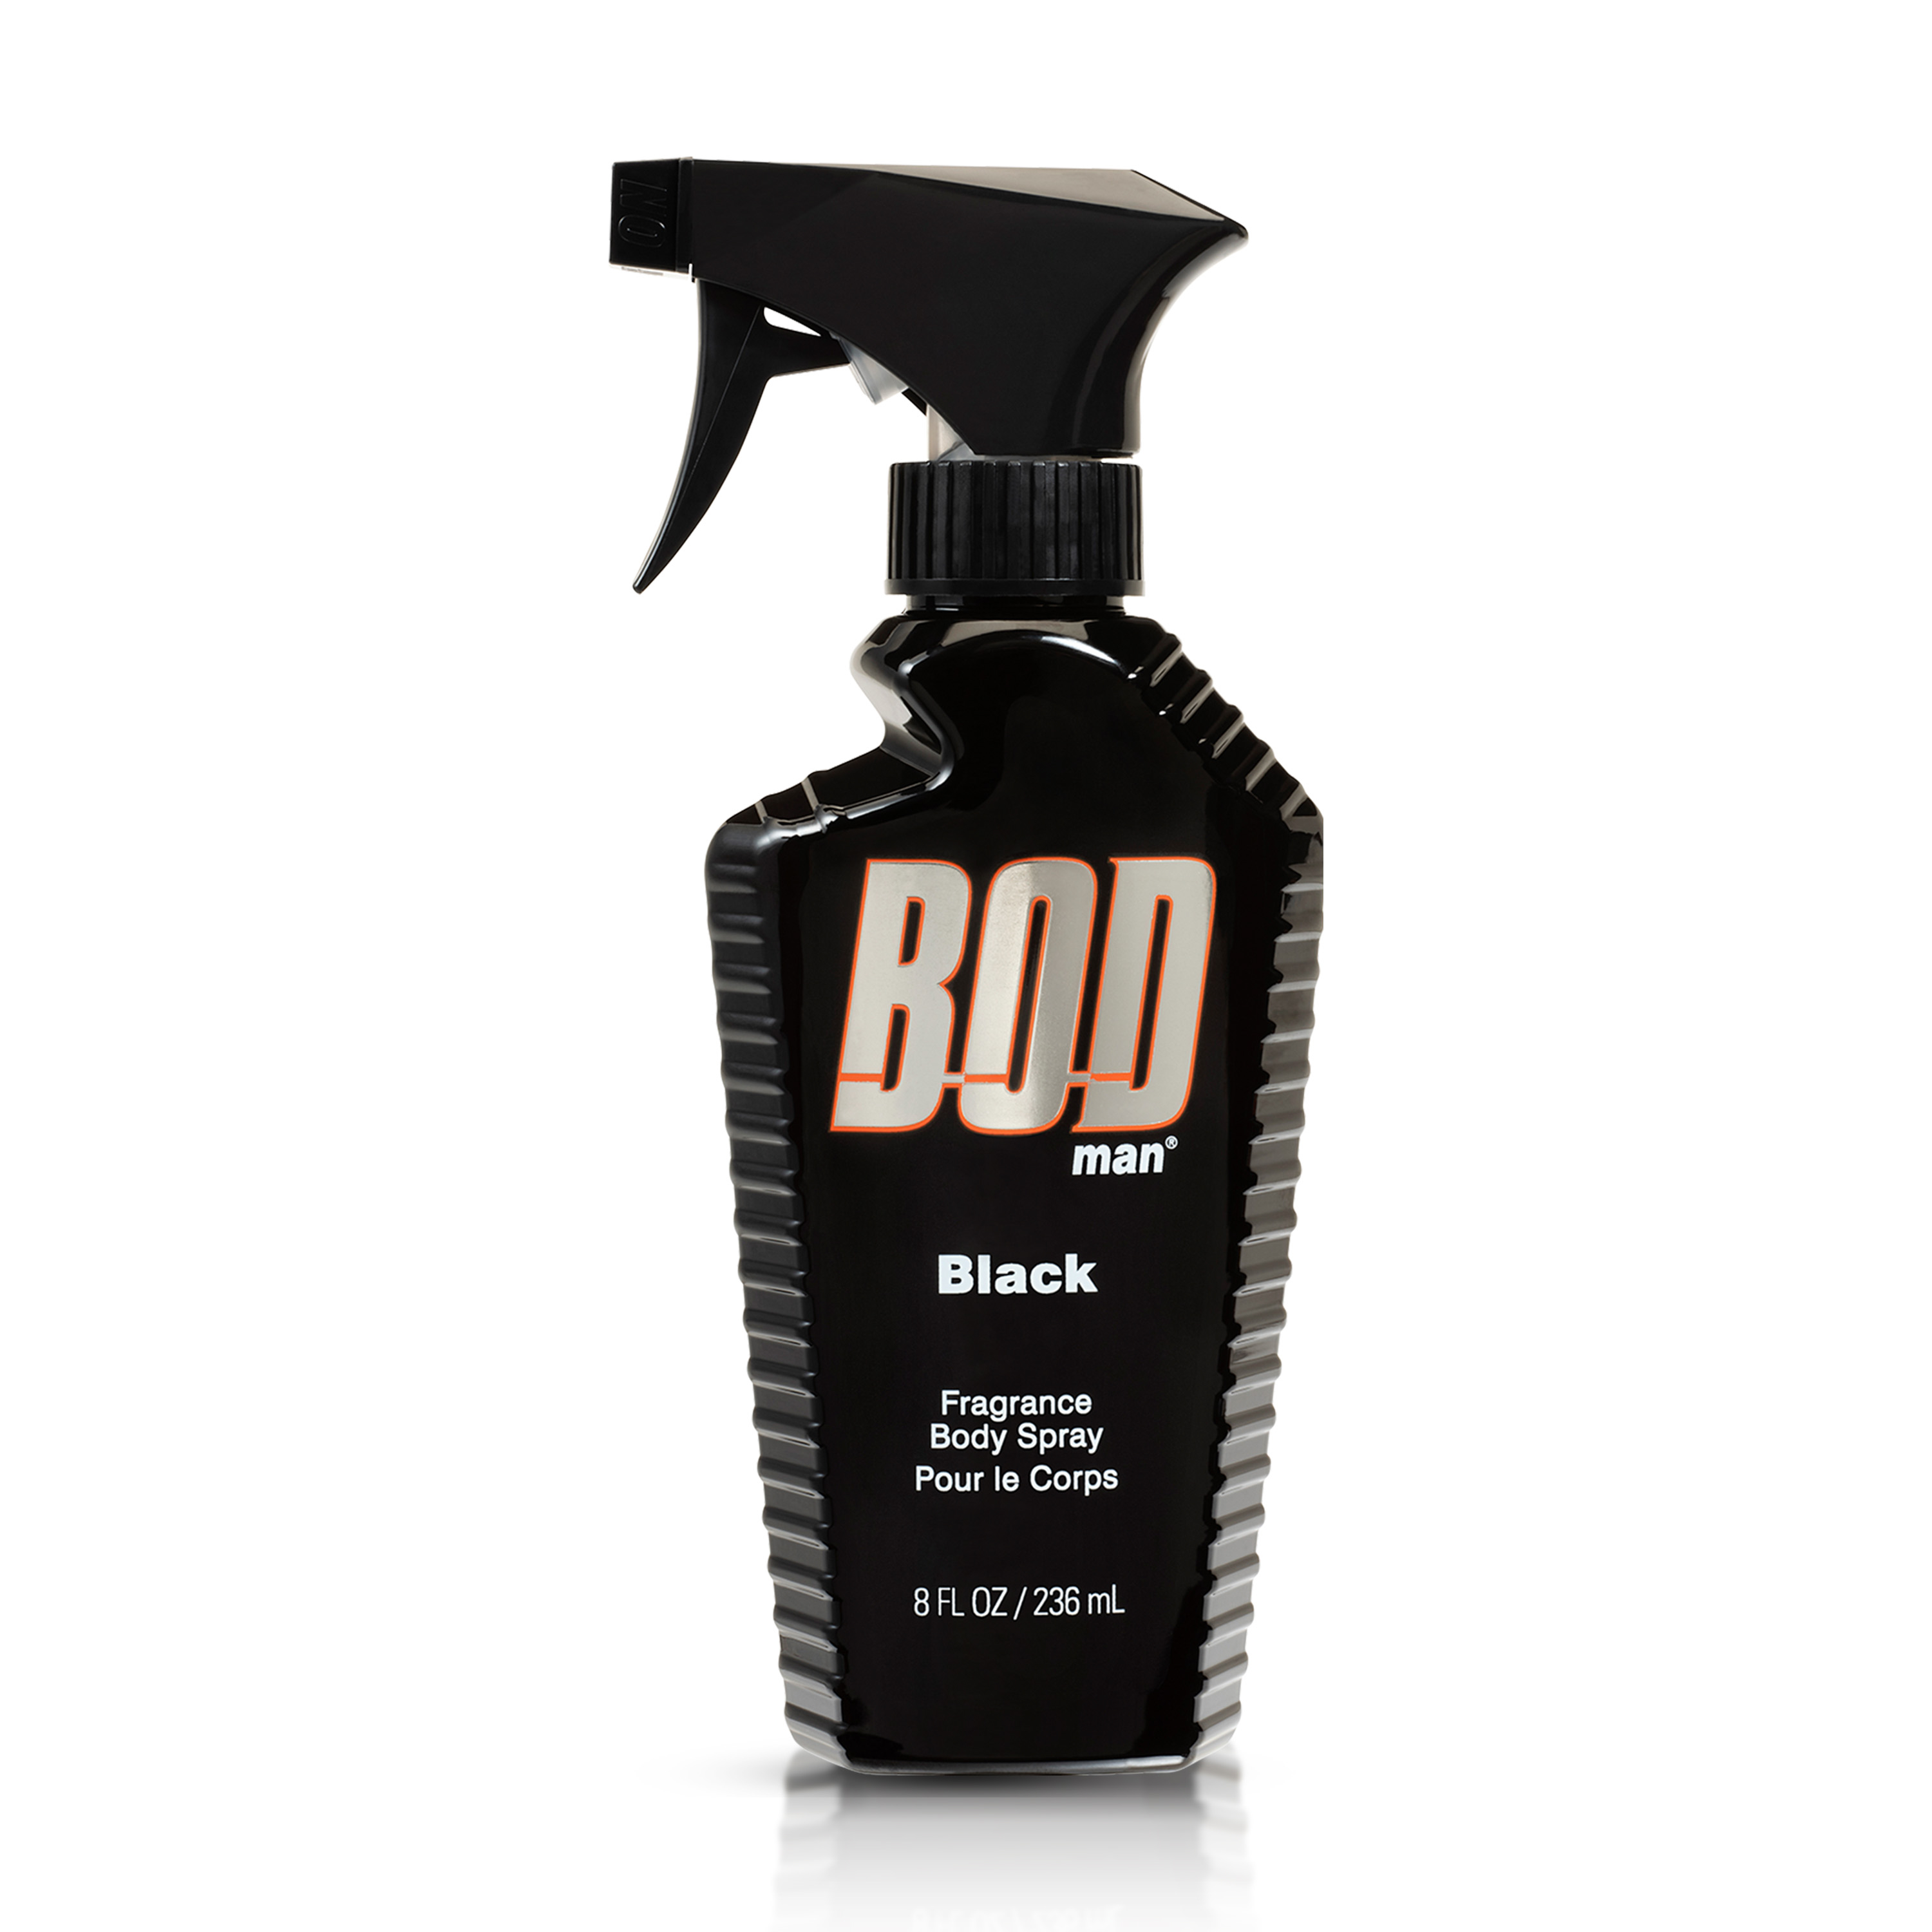 Bod Man Black Body Spray Fragrance, 8 fl.oz. - image 1 of 7